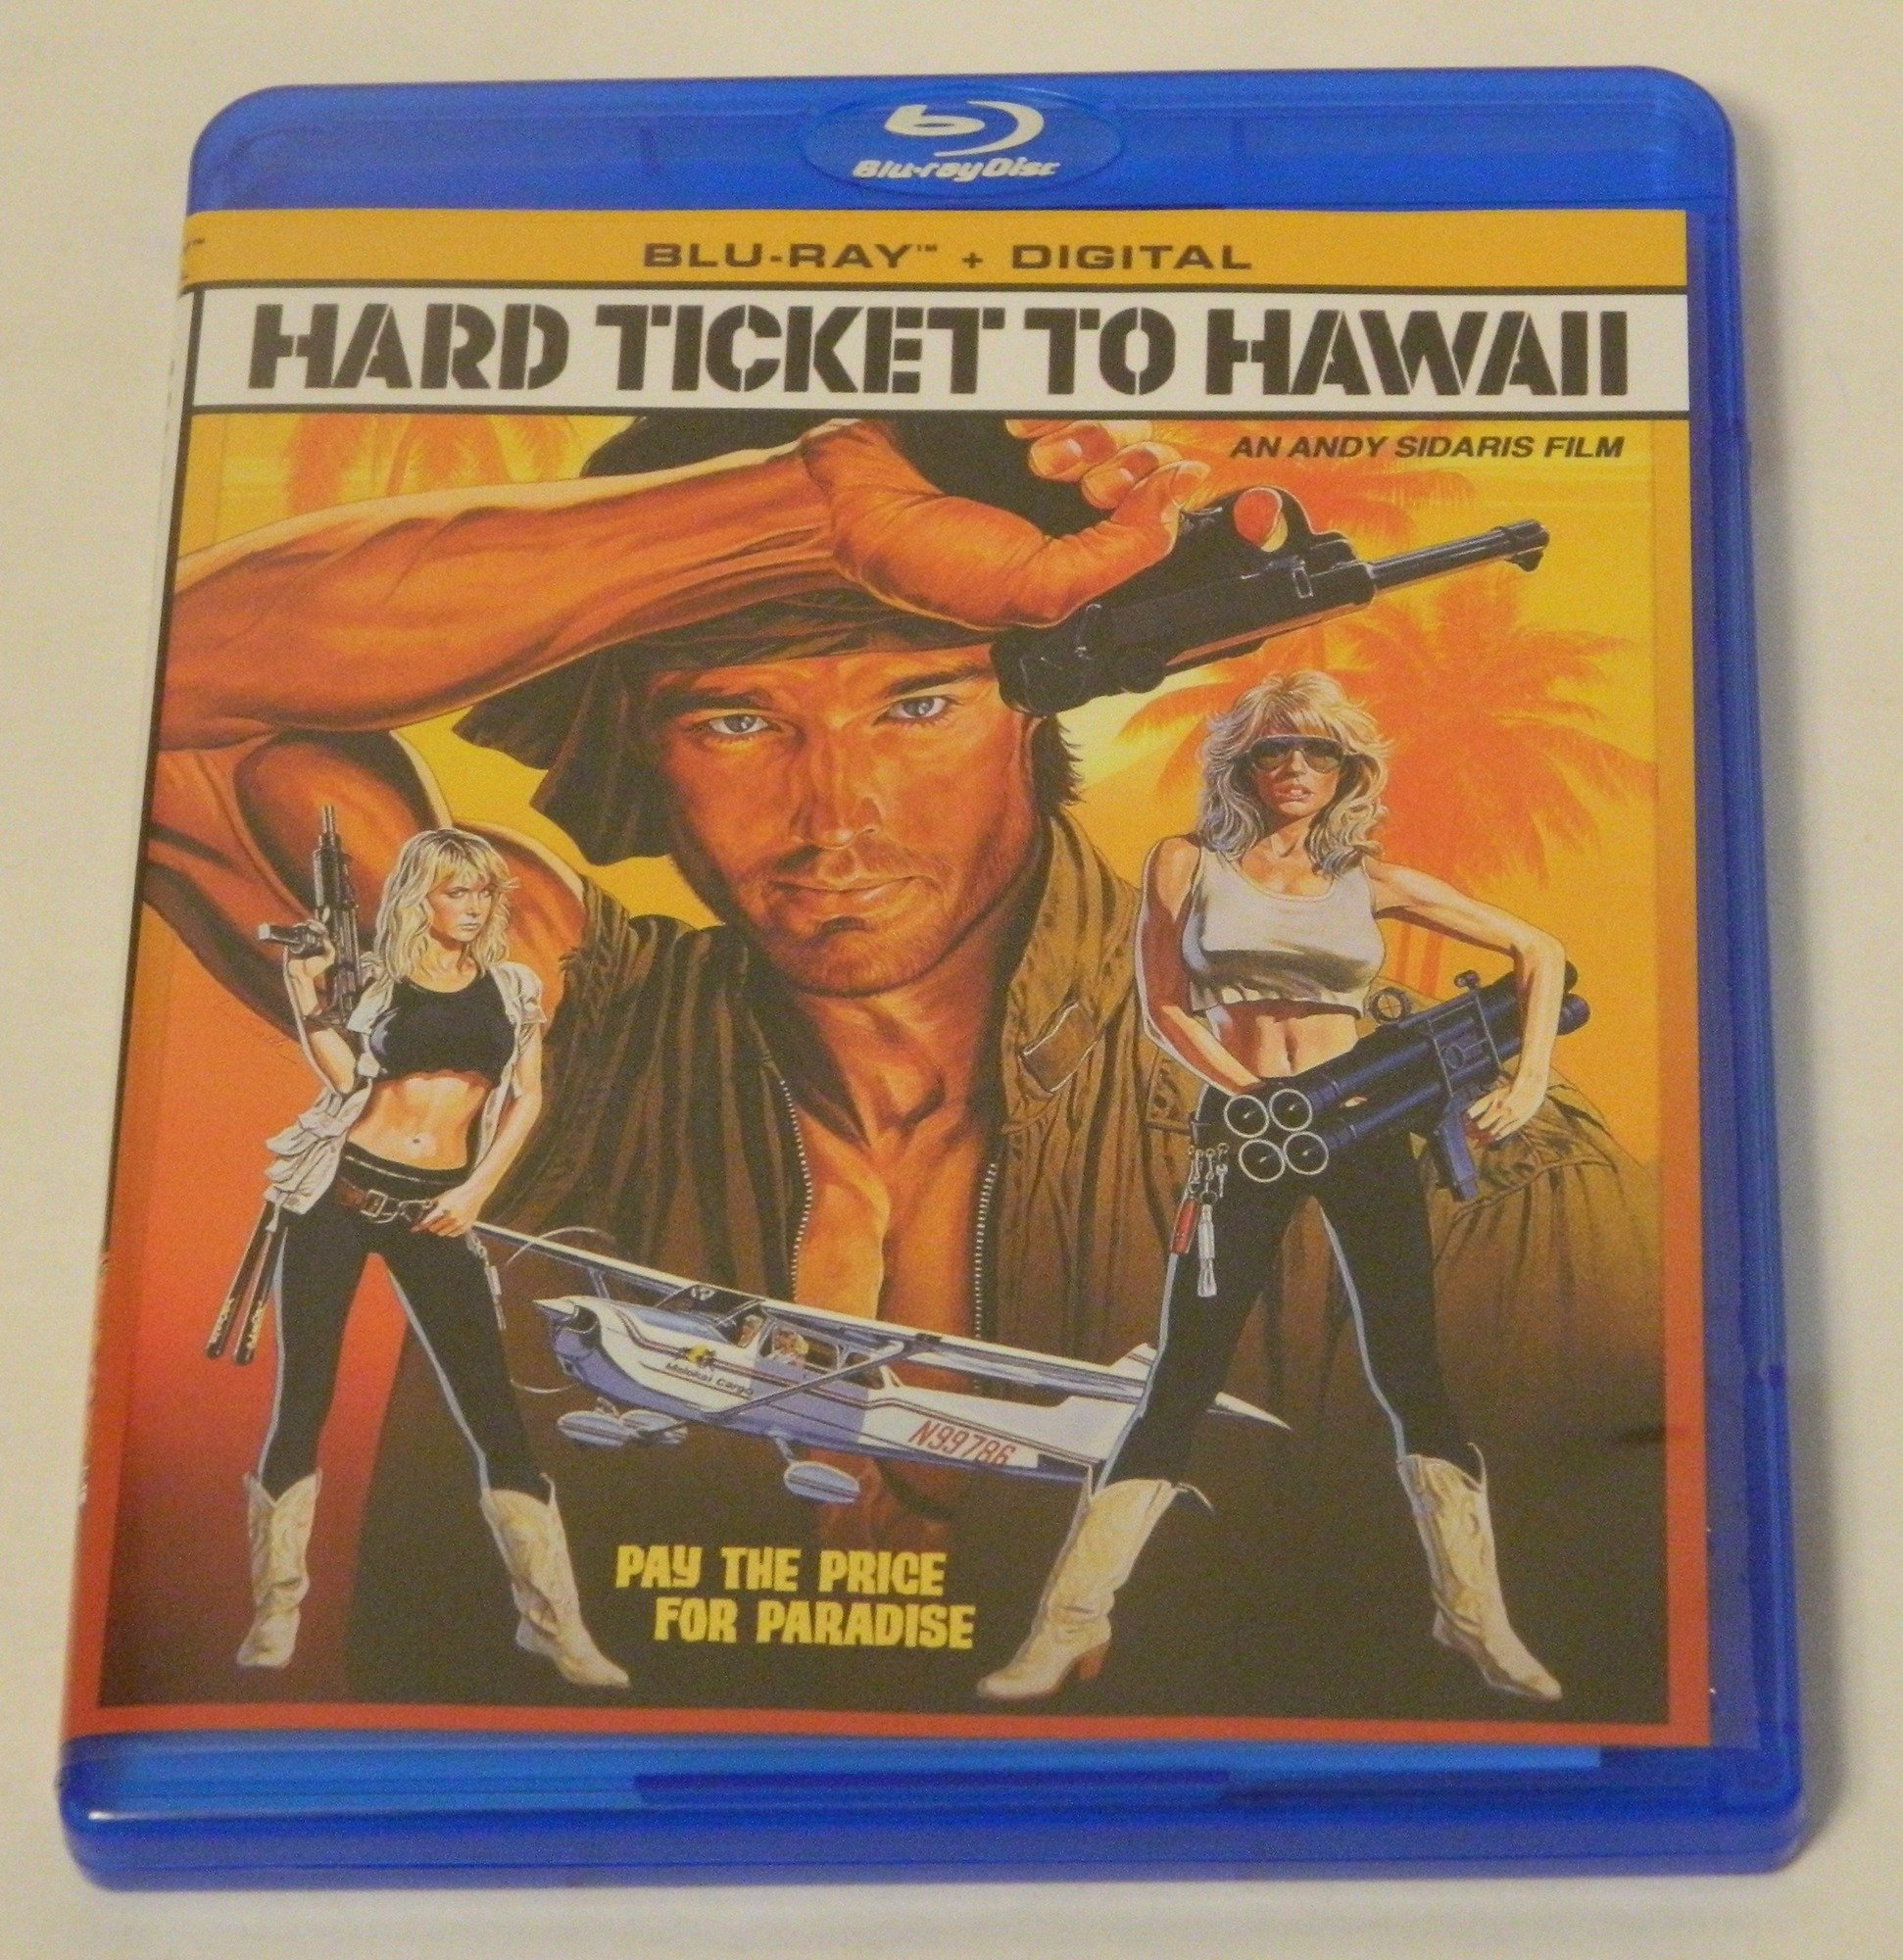 Hard Ticket to Hawaii Blu-ray Review